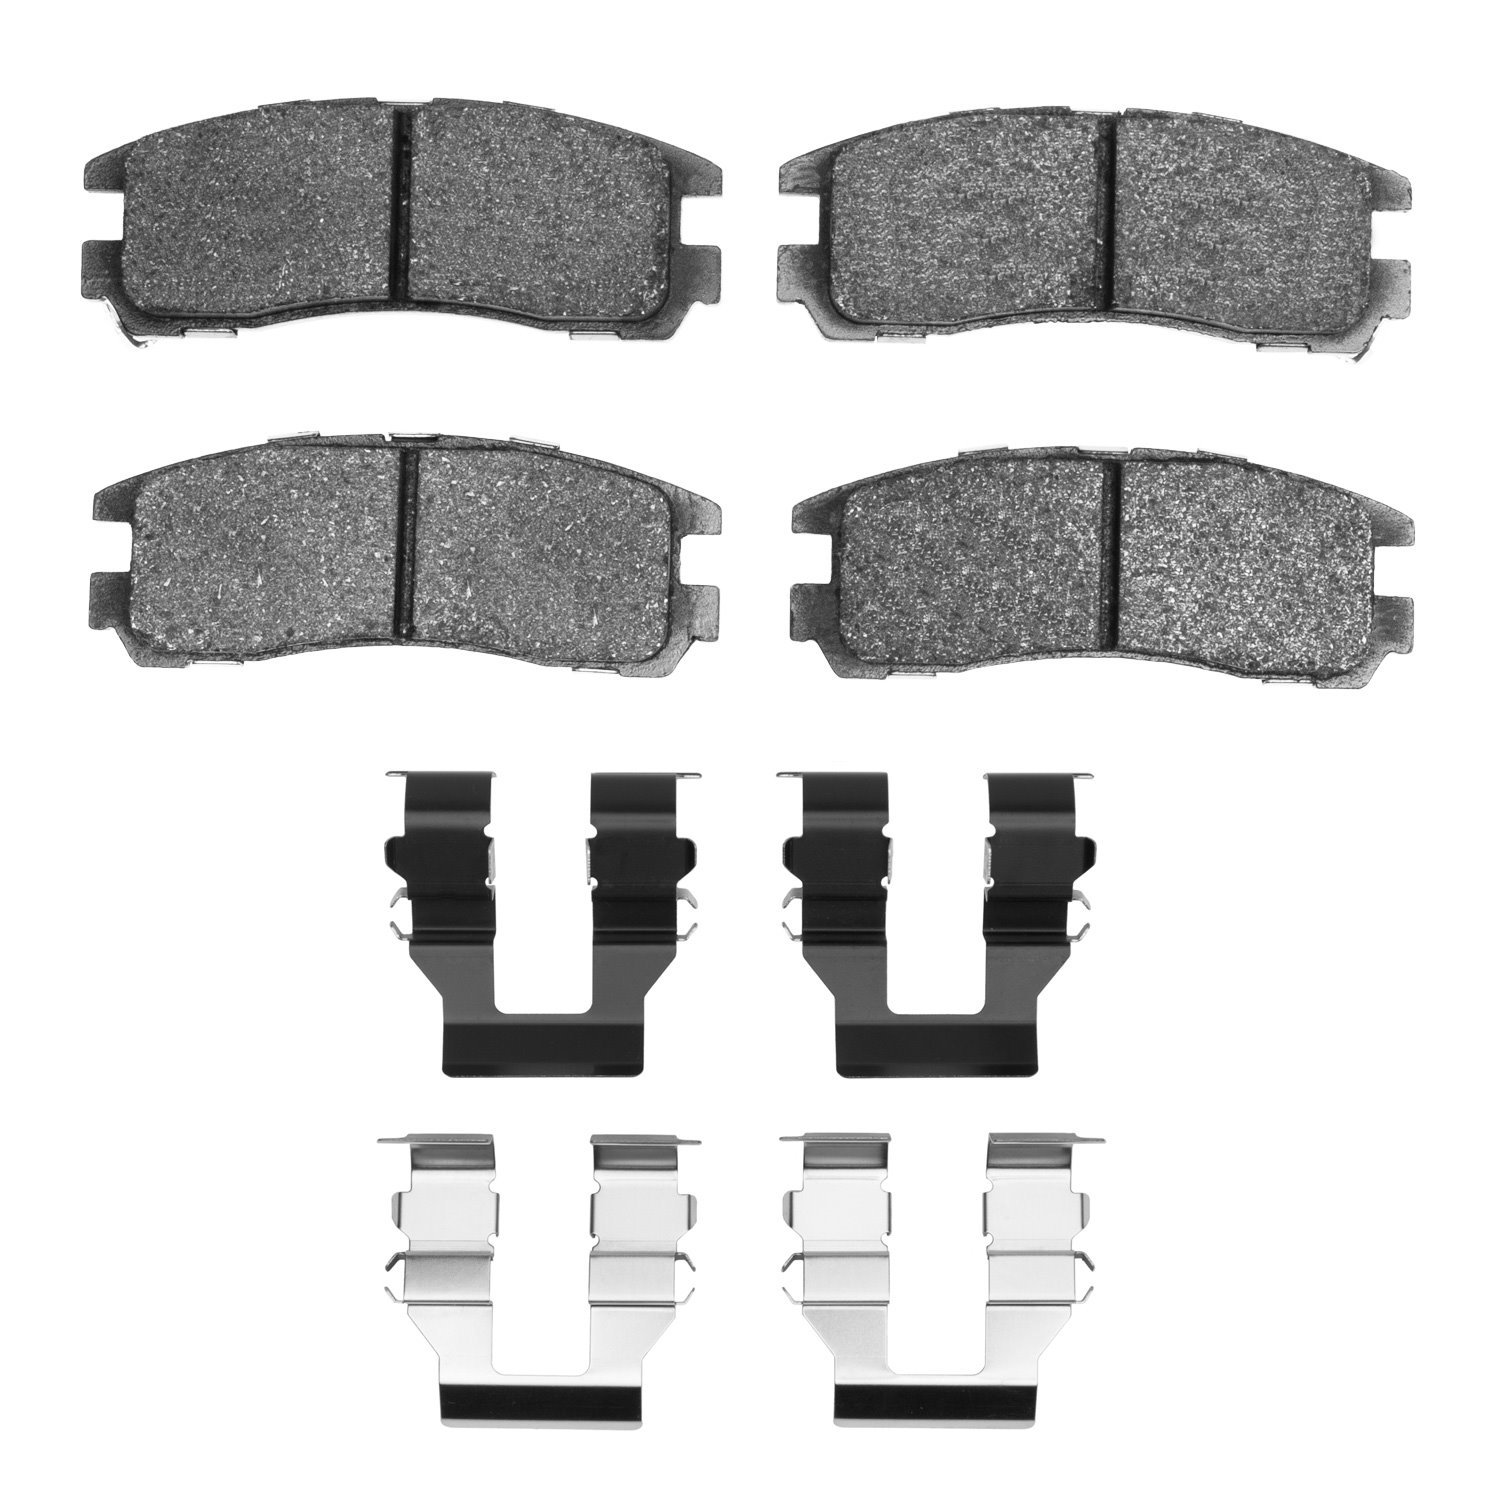 1551-0383-01 5000 Advanced Ceramic Brake Pads & Hardware Kit, 1992-2012 Multiple Makes/Models, Position: Rear